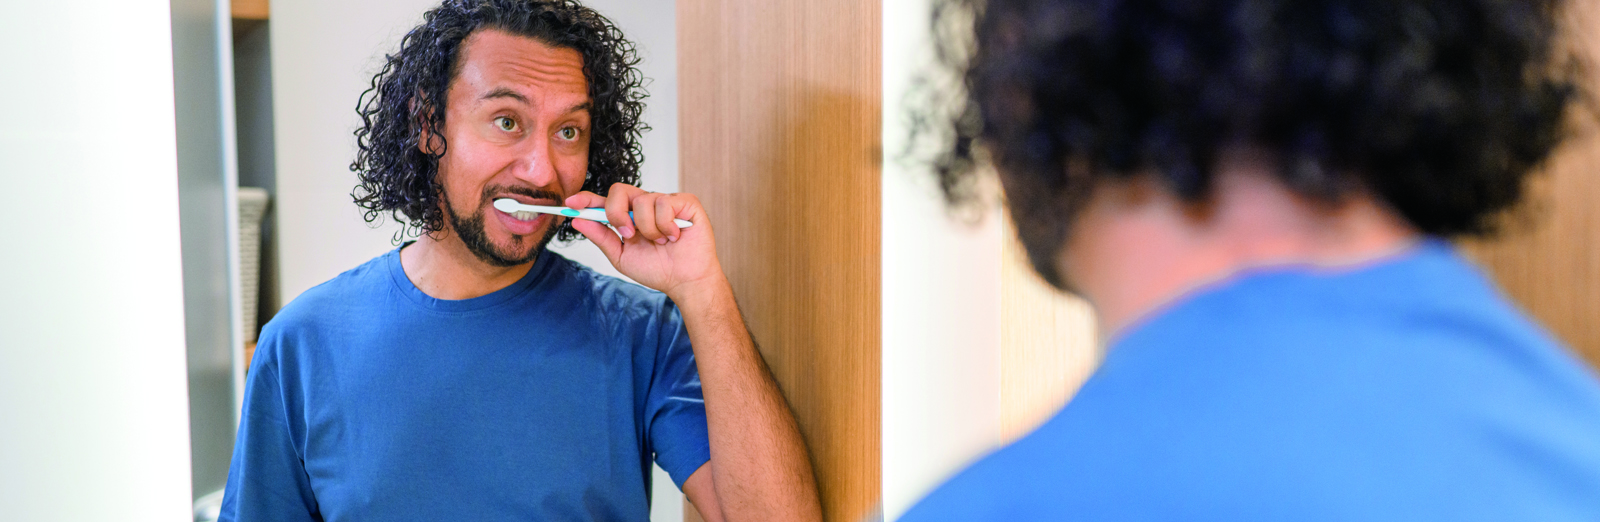 man-brushing-teeth-in-mirror-1600x522.jpg